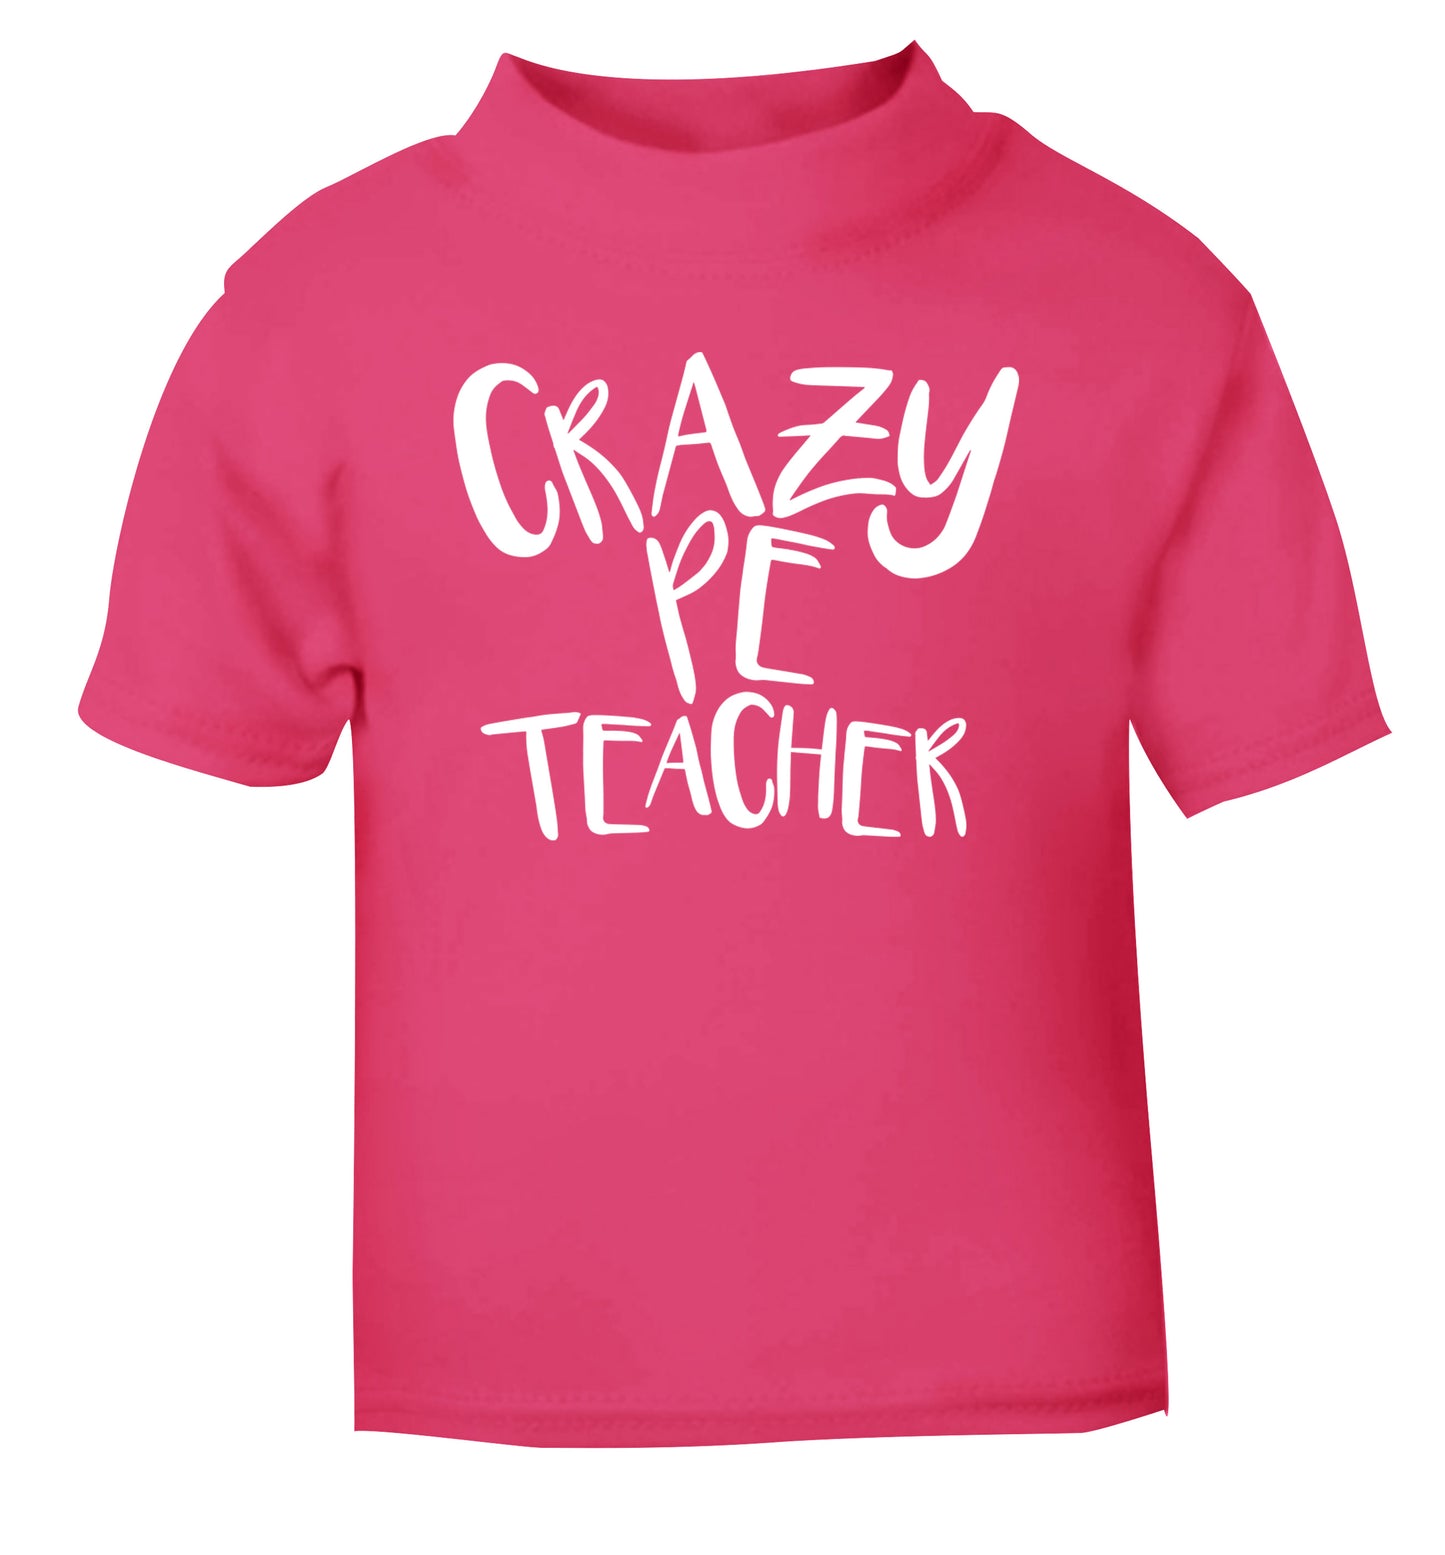 Crazy PE teacher pink Baby Toddler Tshirt 2 Years